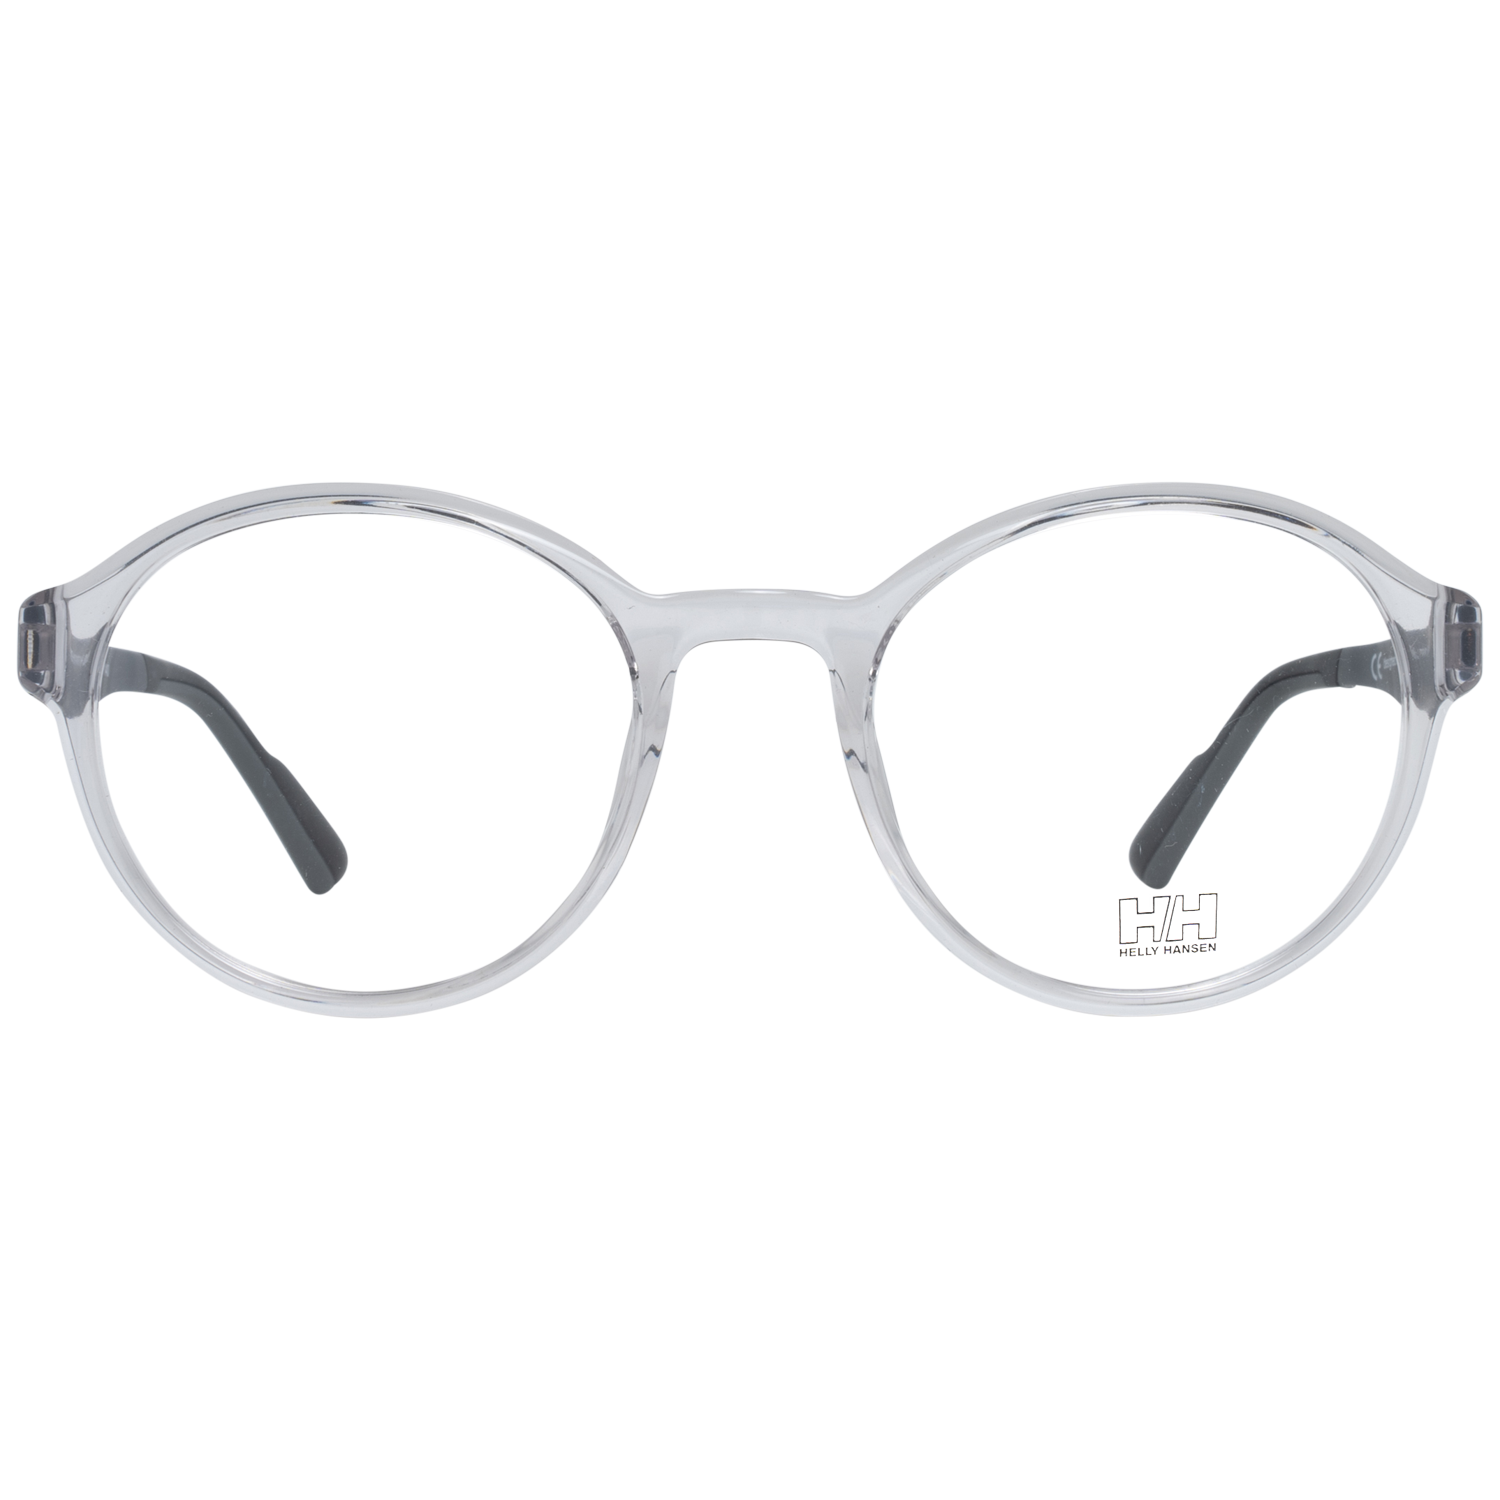 Helly Hansen Frames Helly Hansen Glasses Optical Frame  HH1063 C03 51 Eyeglasses Eyewear UK USA Australia 